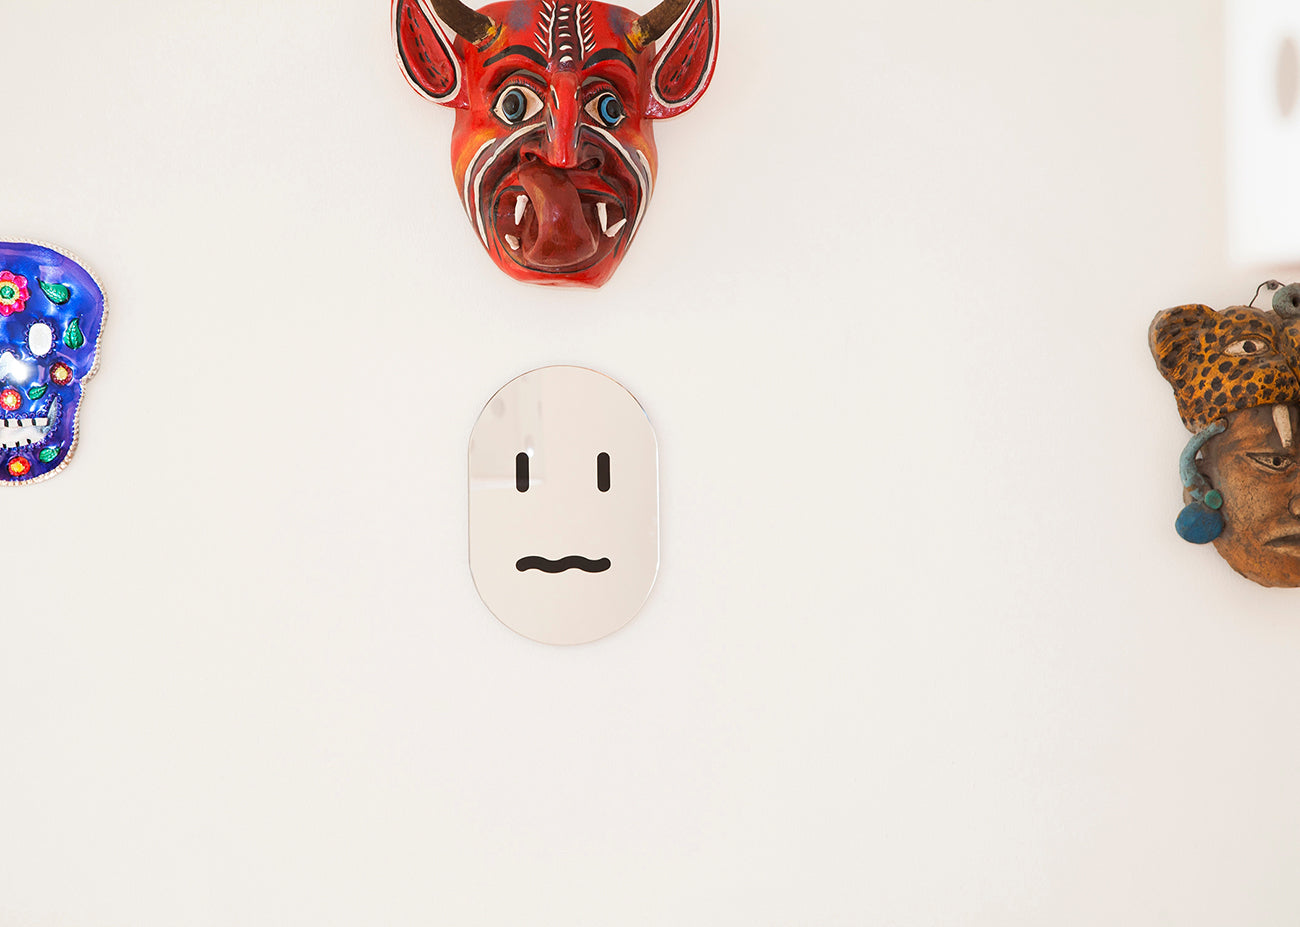 "Maybe" Mirror Mask by Chen Chen & Kai Williams